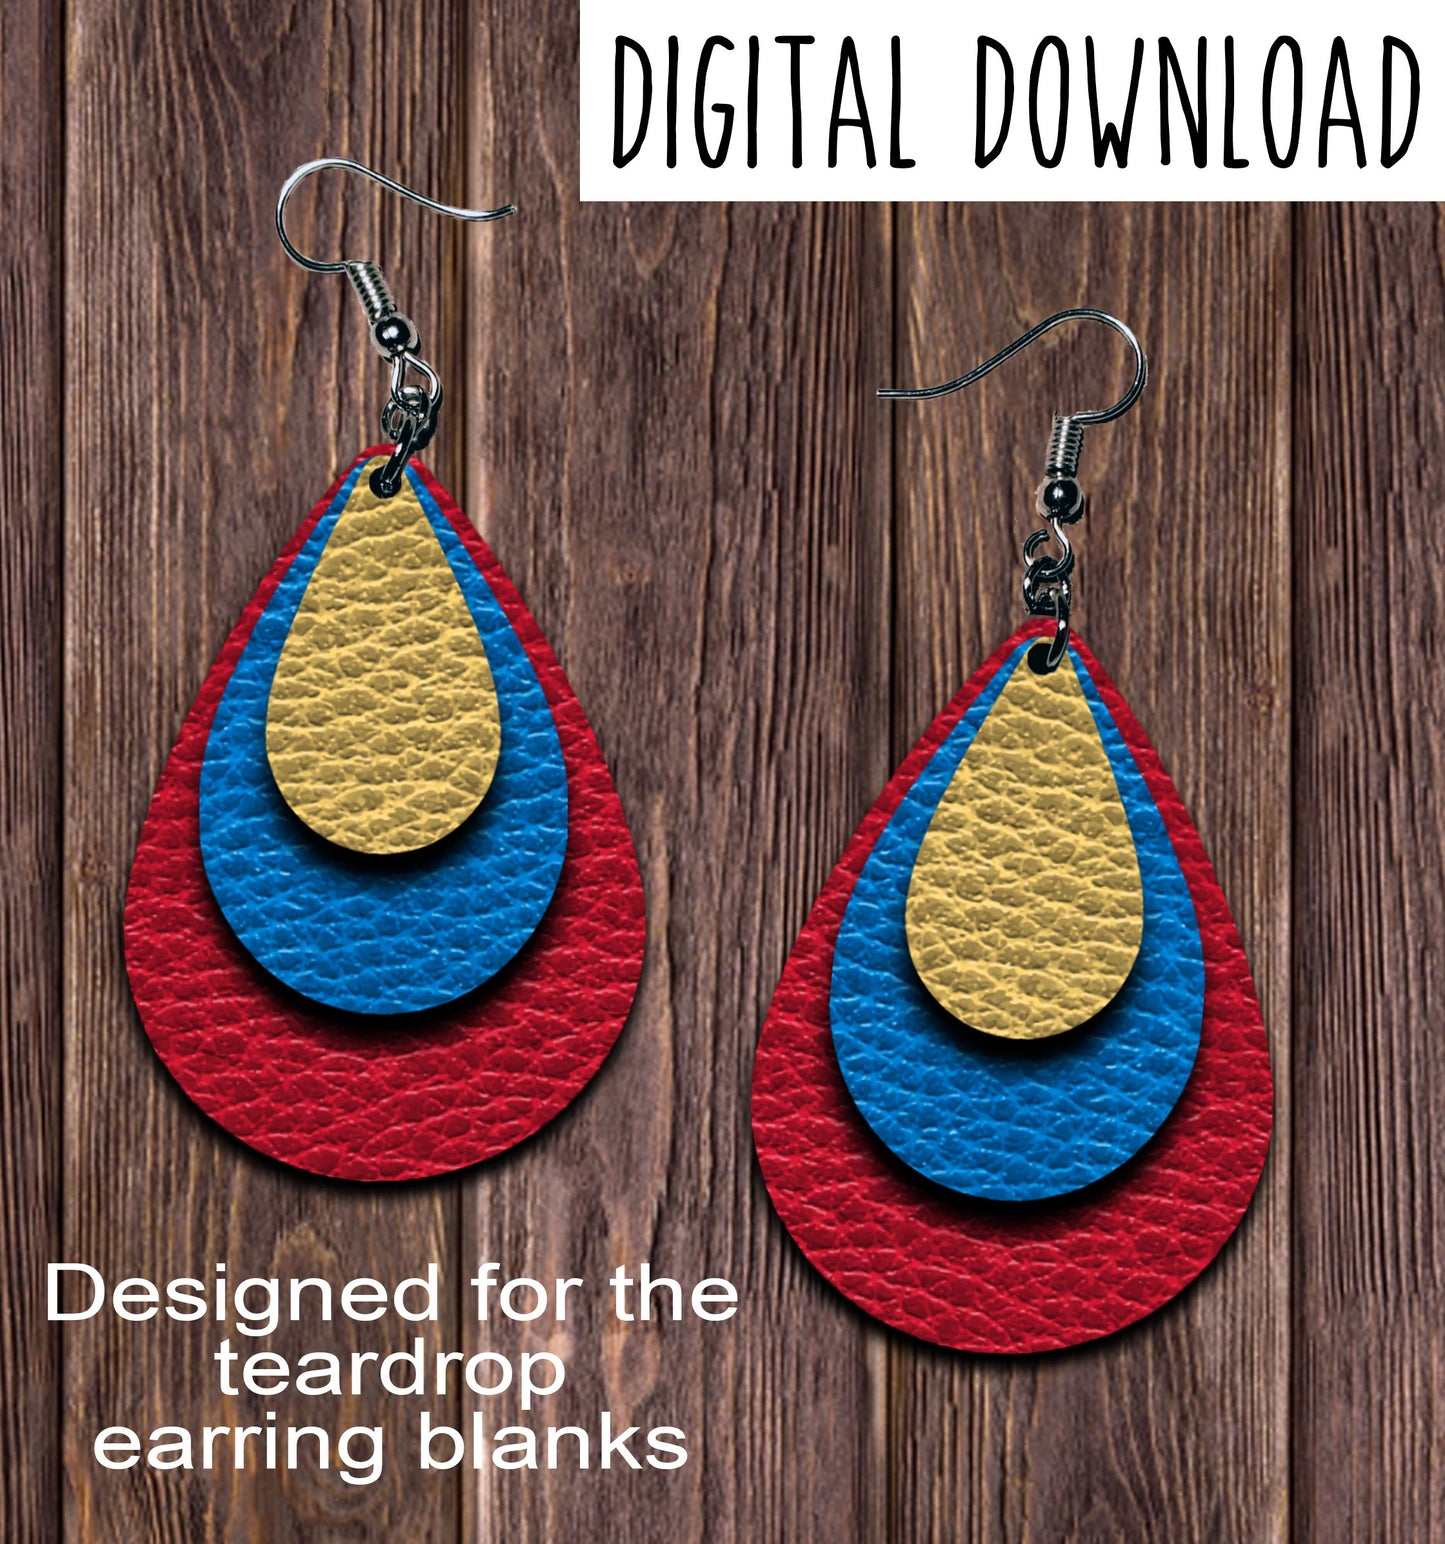 Primary Colors Teardrop Earring Sublimation Design, Hand drawn Teardrop Sublimation earring design, digital download, JPG, PNG